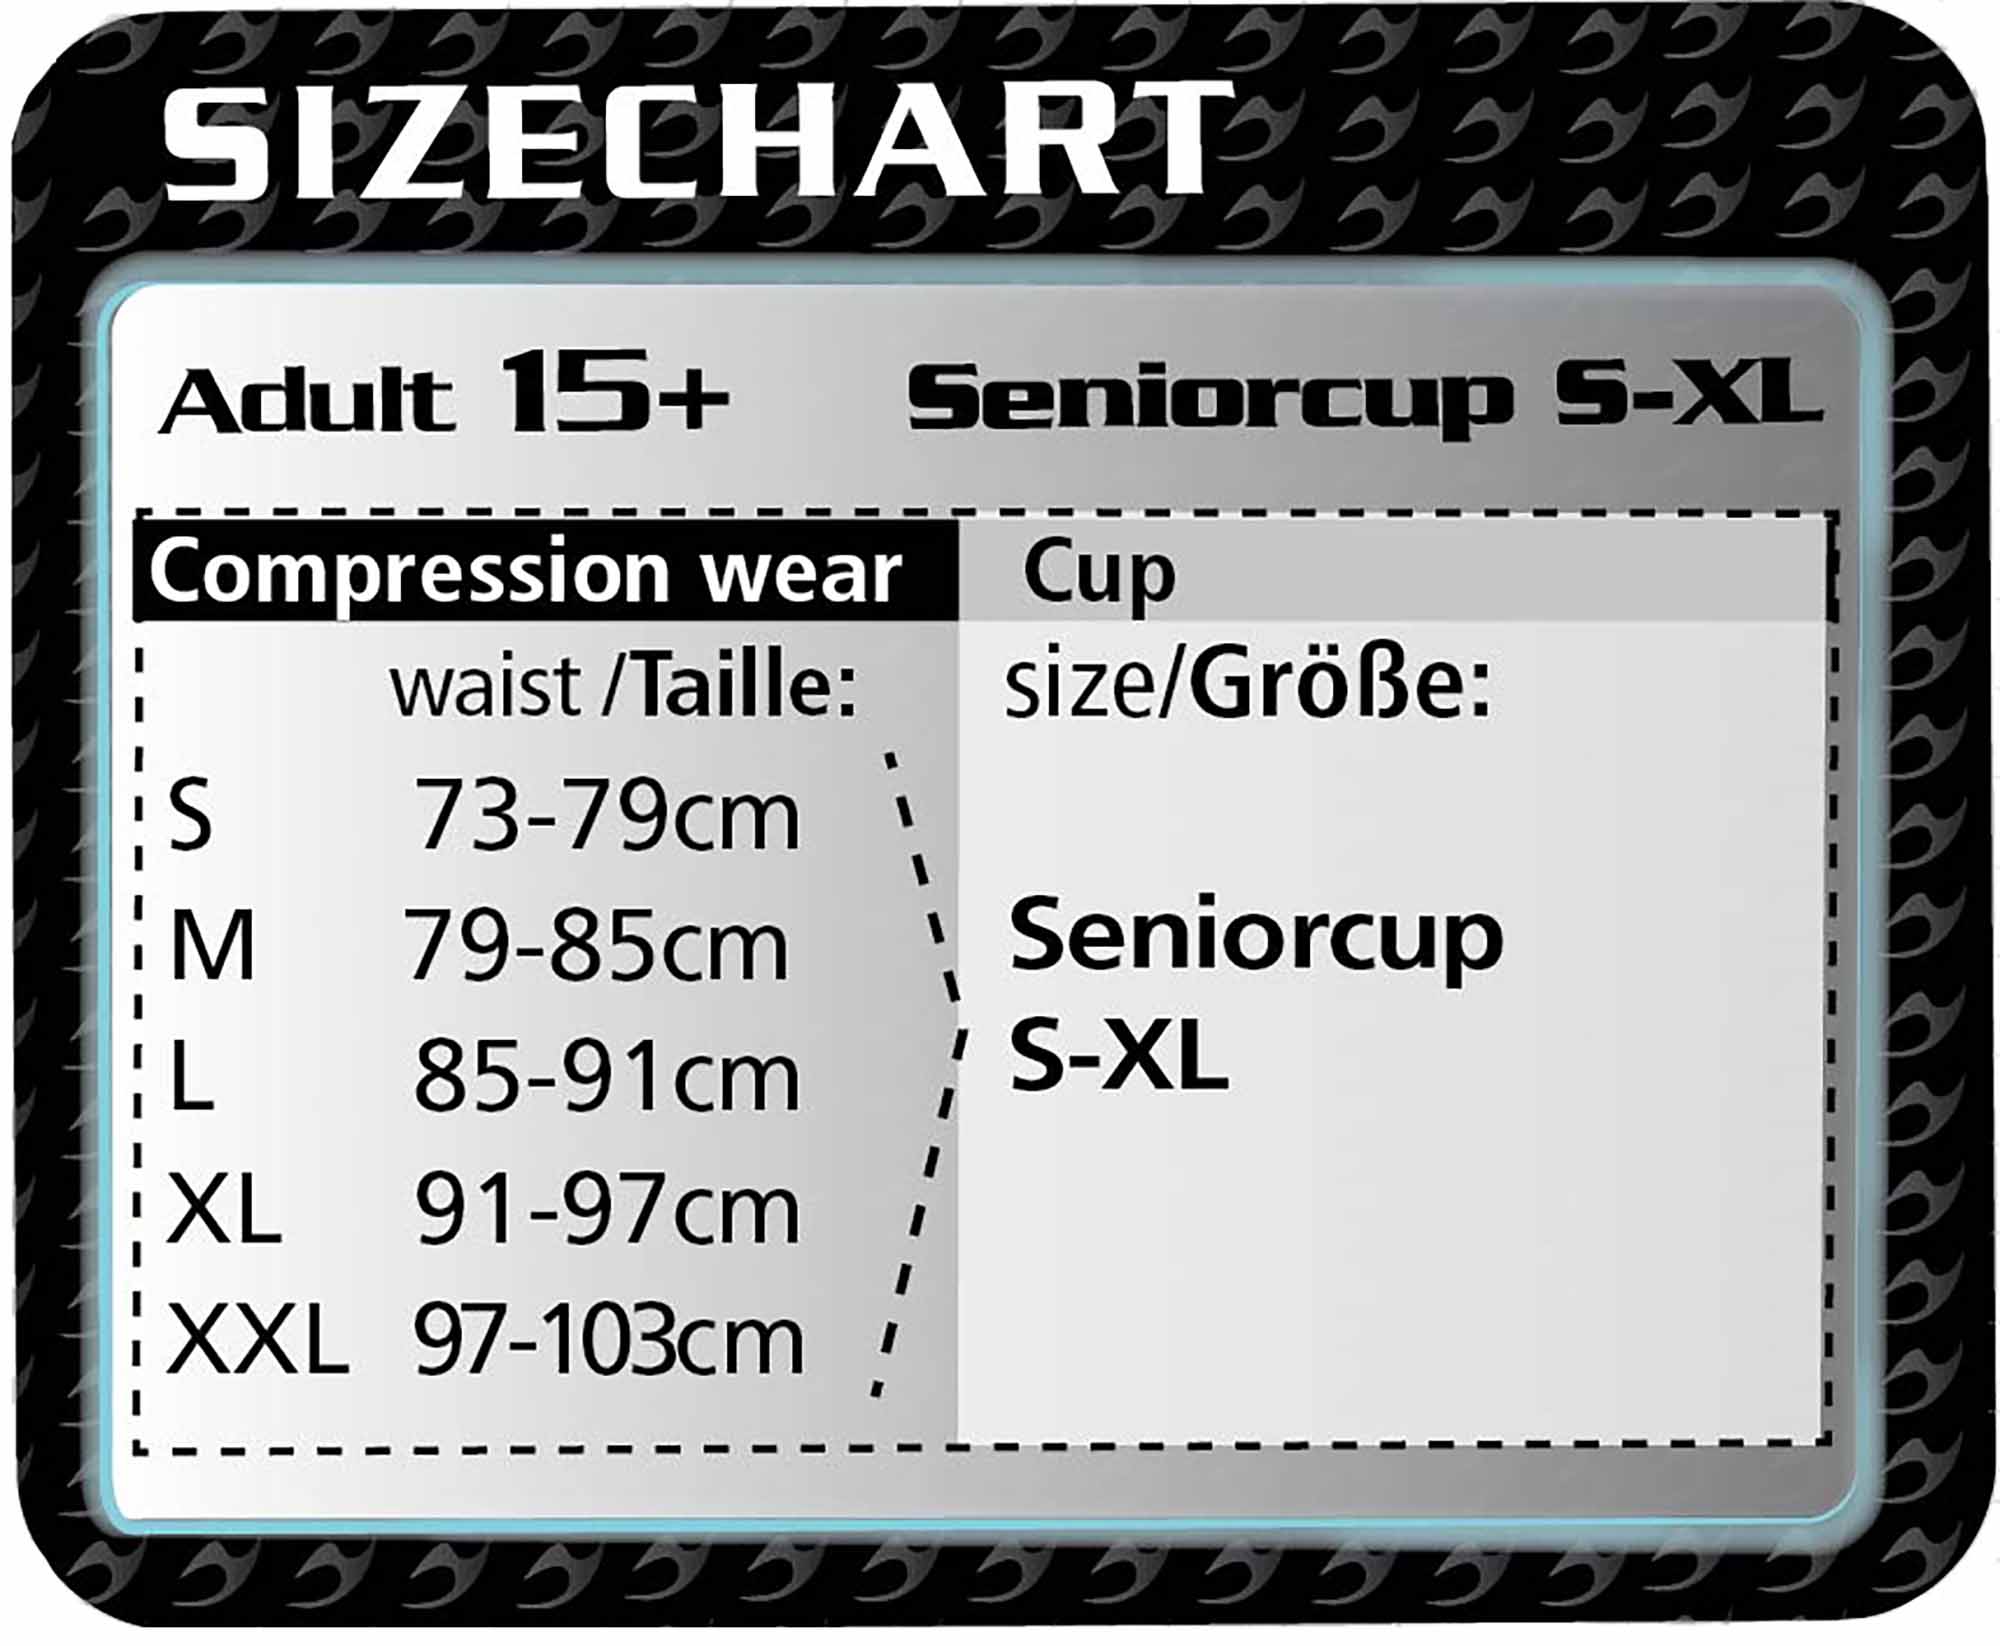 Ju-Sports Compression ProLine Shorty + Motion Pro Flexcup, Tiefschutz